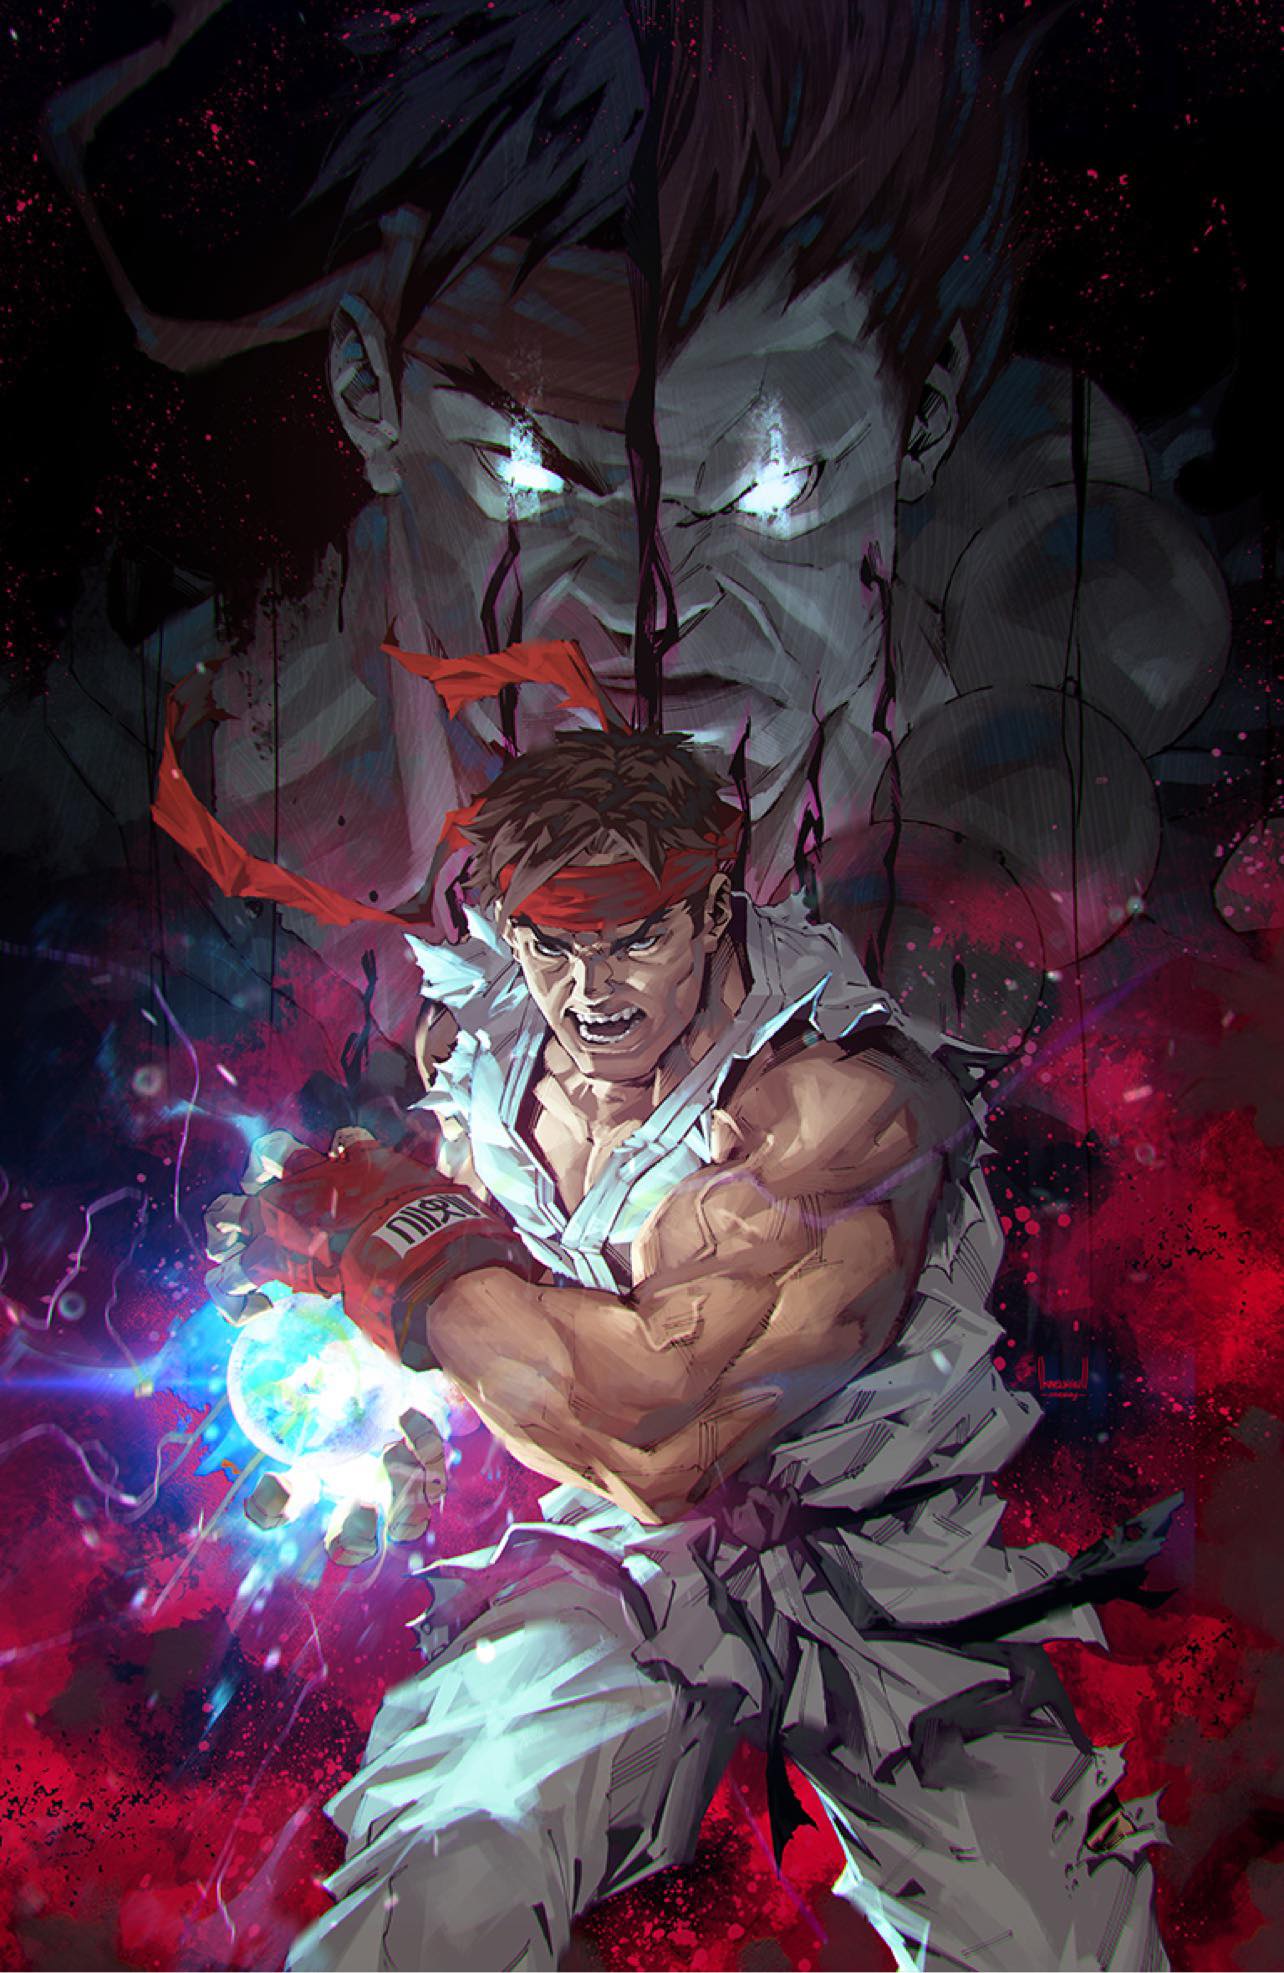 Street Fighter Masters: Akuma vs Ryu #1 Cvr B Genzoman Ryu - Discount Comic  Book Service